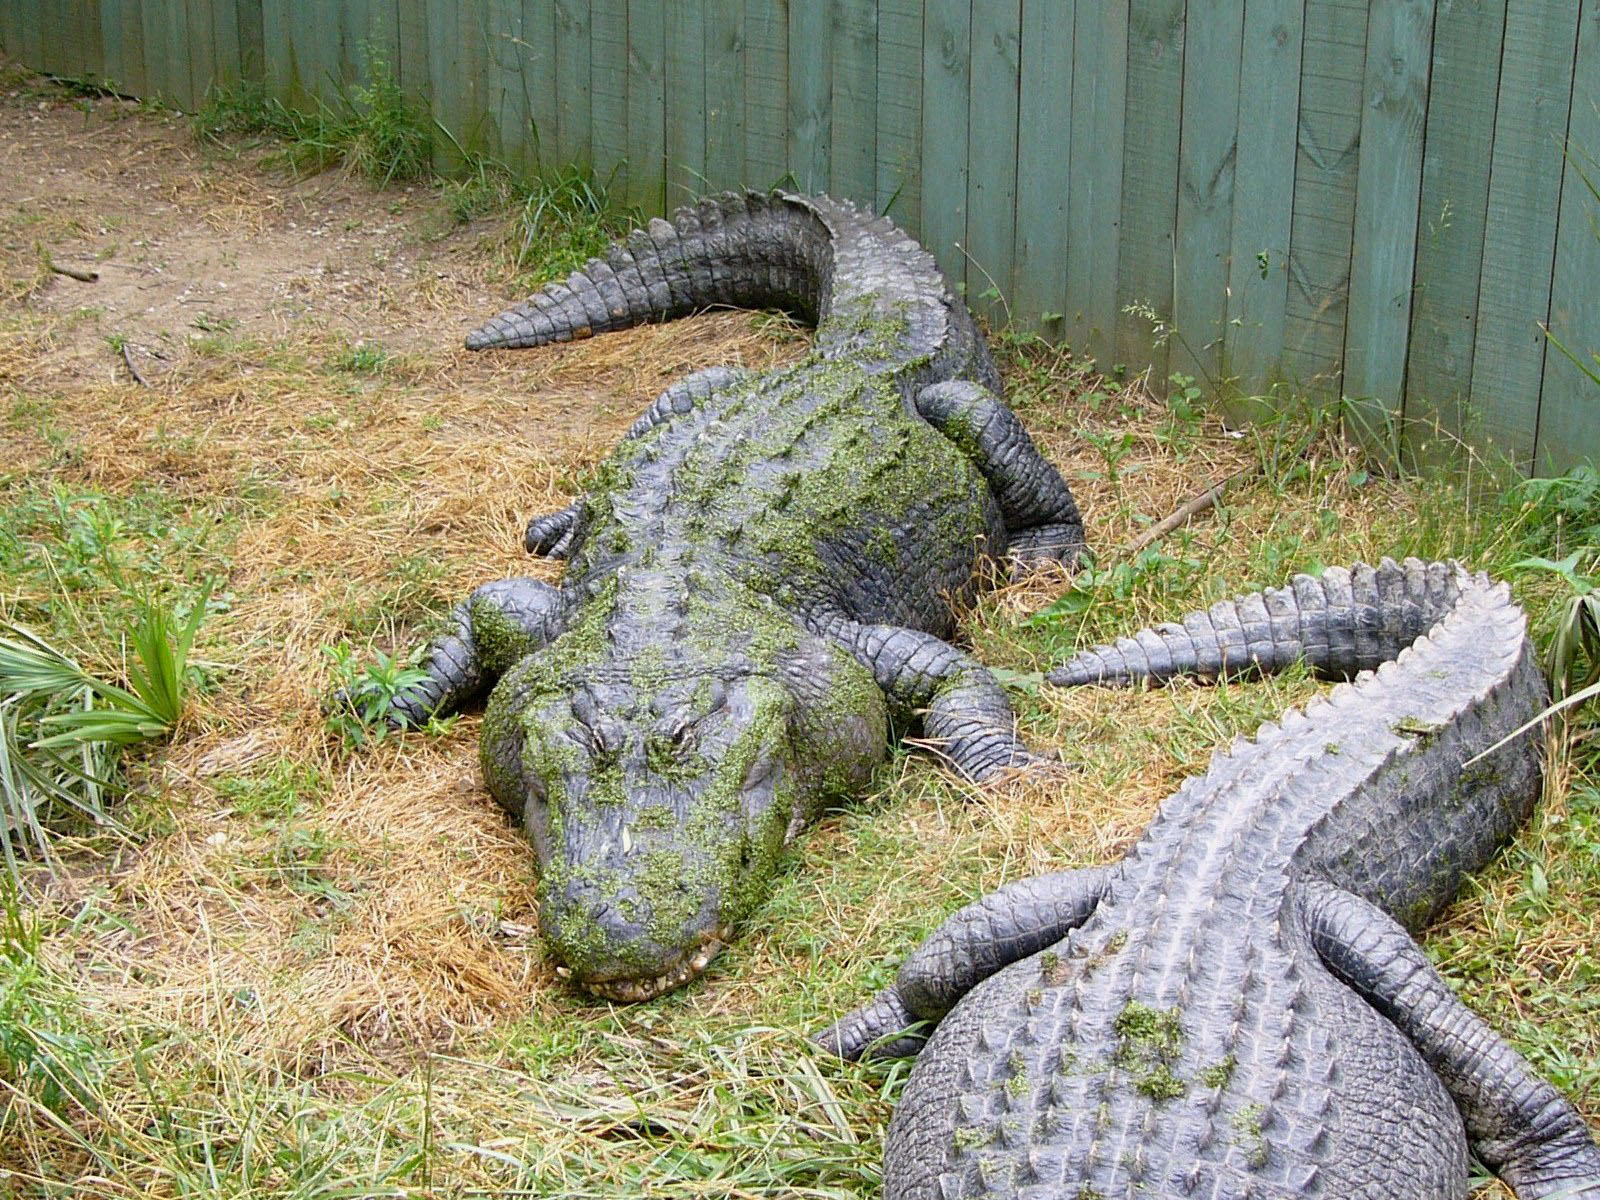 The Online Zoo American Alligator